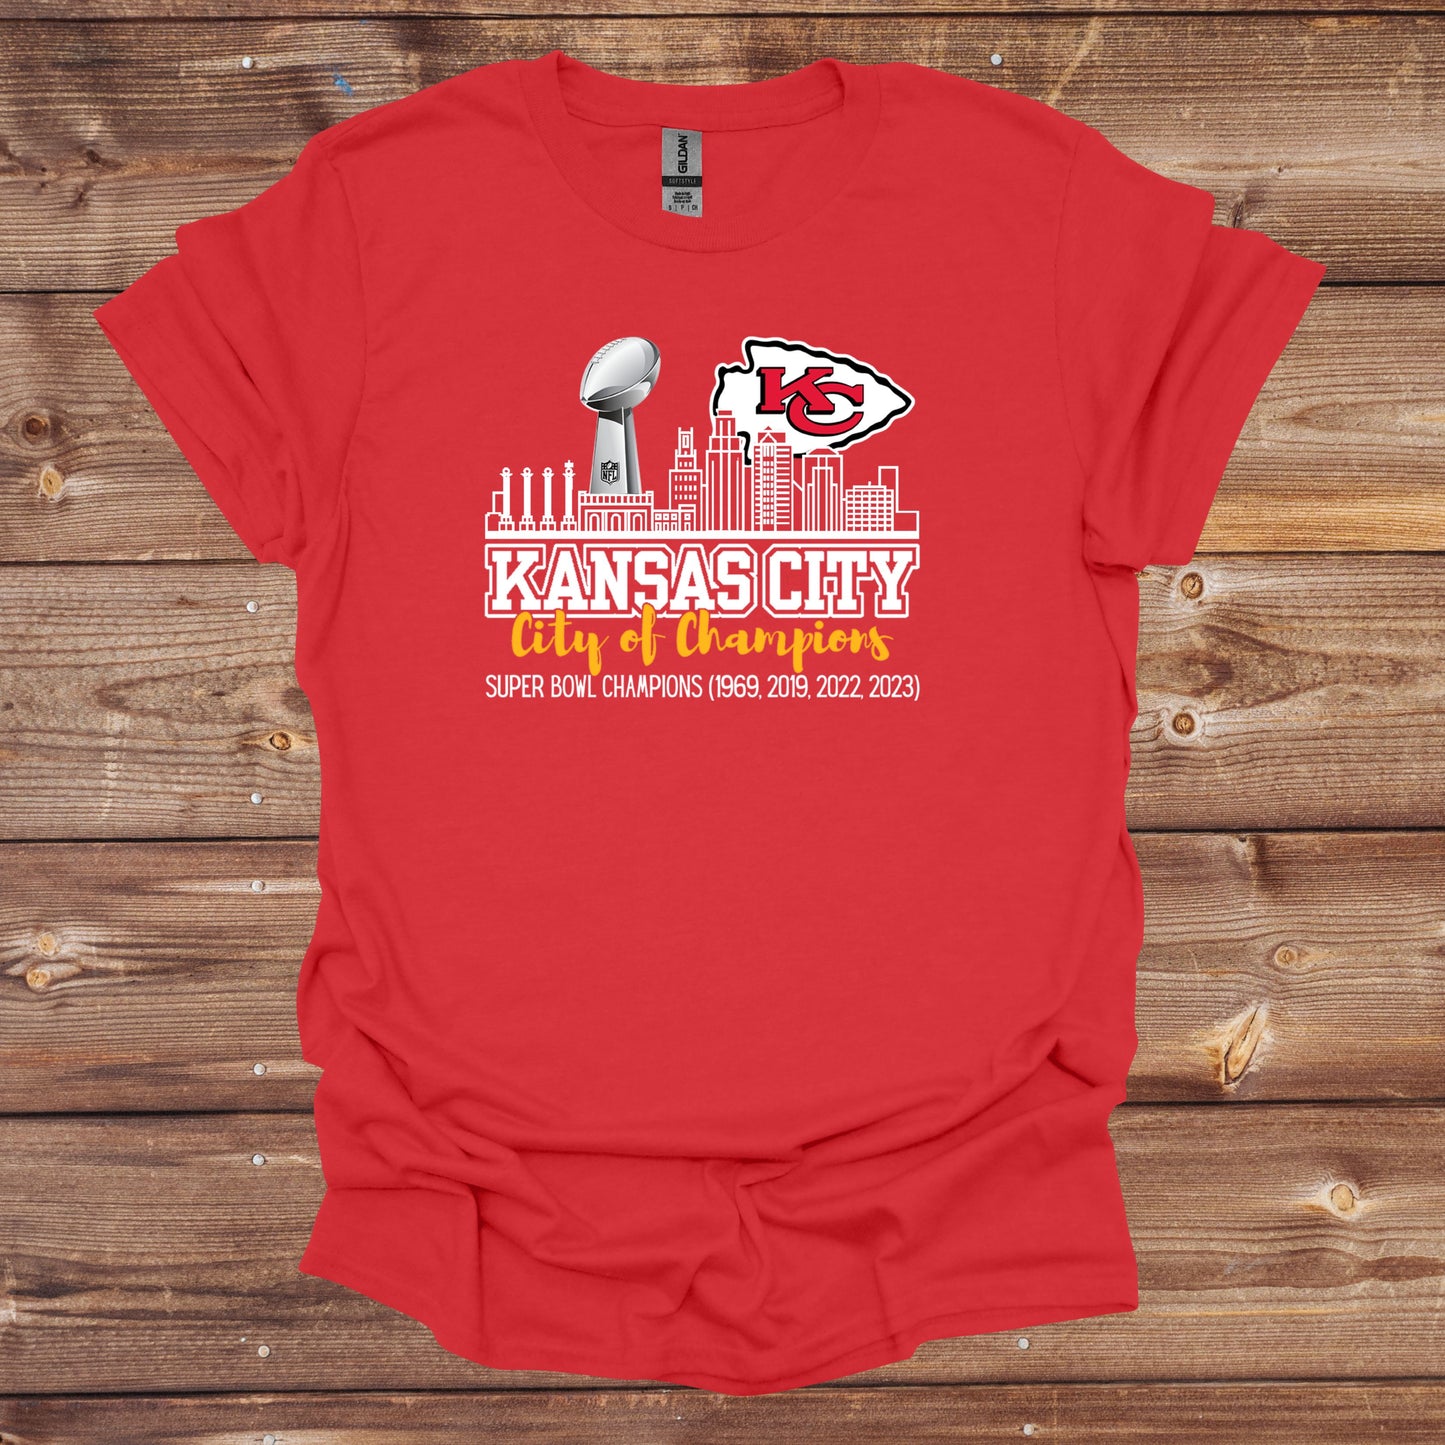 Football T-Shirt - Kansas City Chiefs - City of Champions - Adult Tee Shirts - Chiefs - Sports